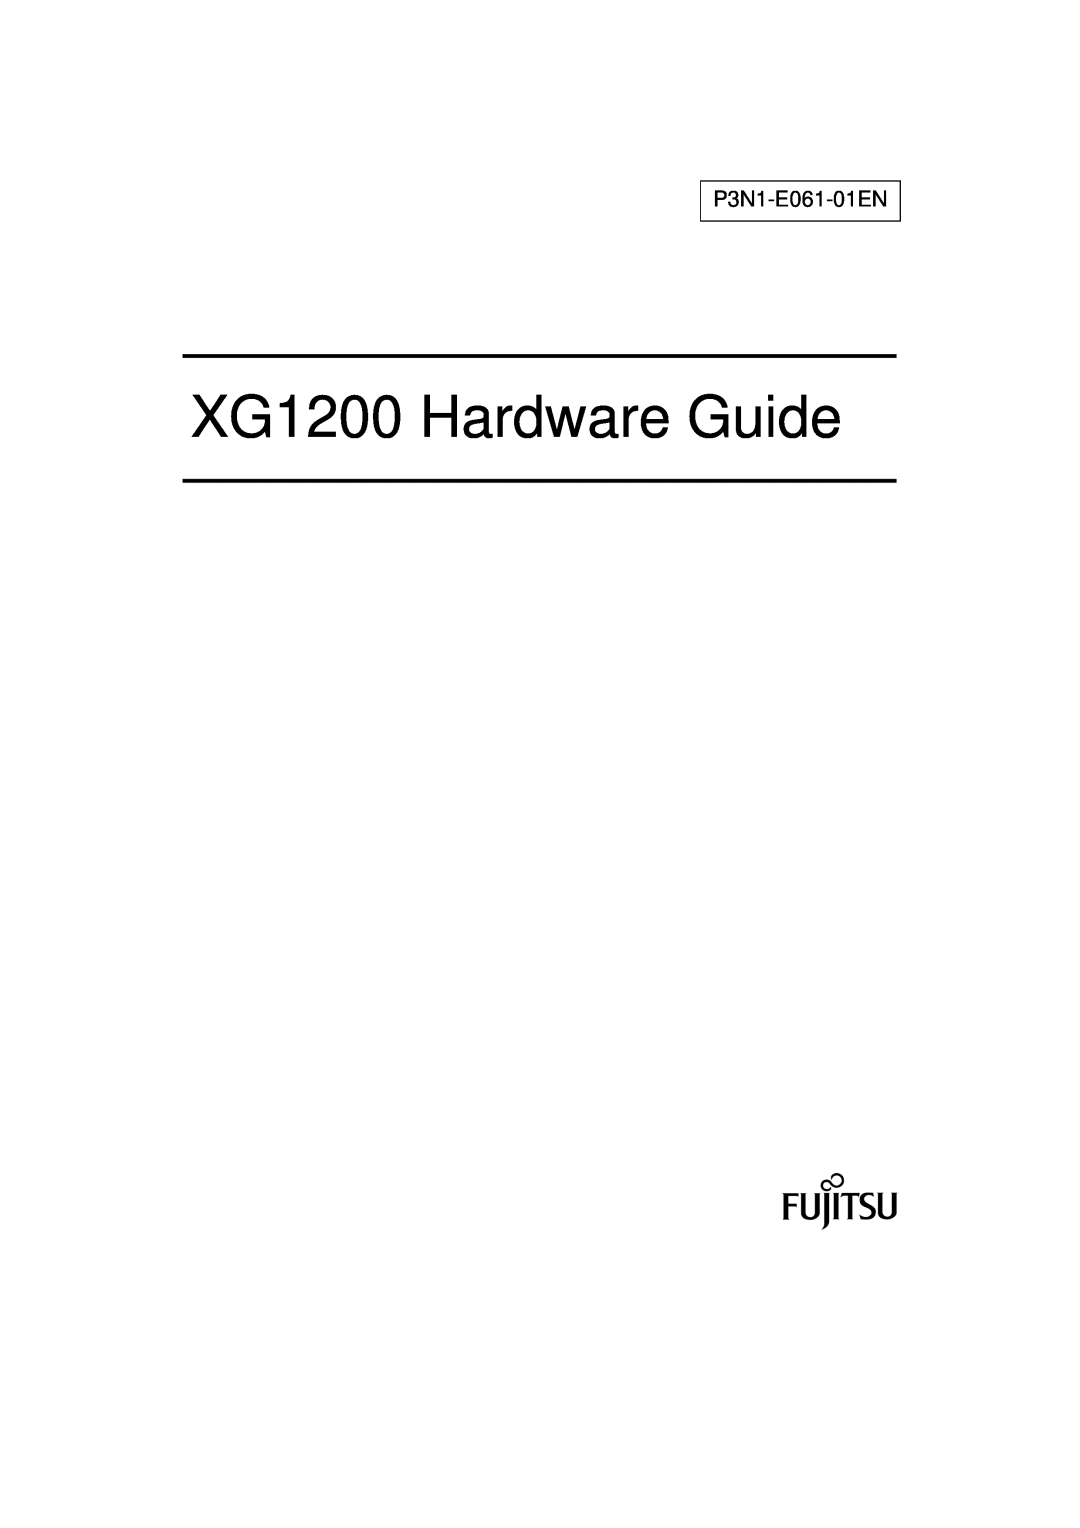 Fujitsu manual XG1200 Hardware Guide, P3N1-E061-01EN 